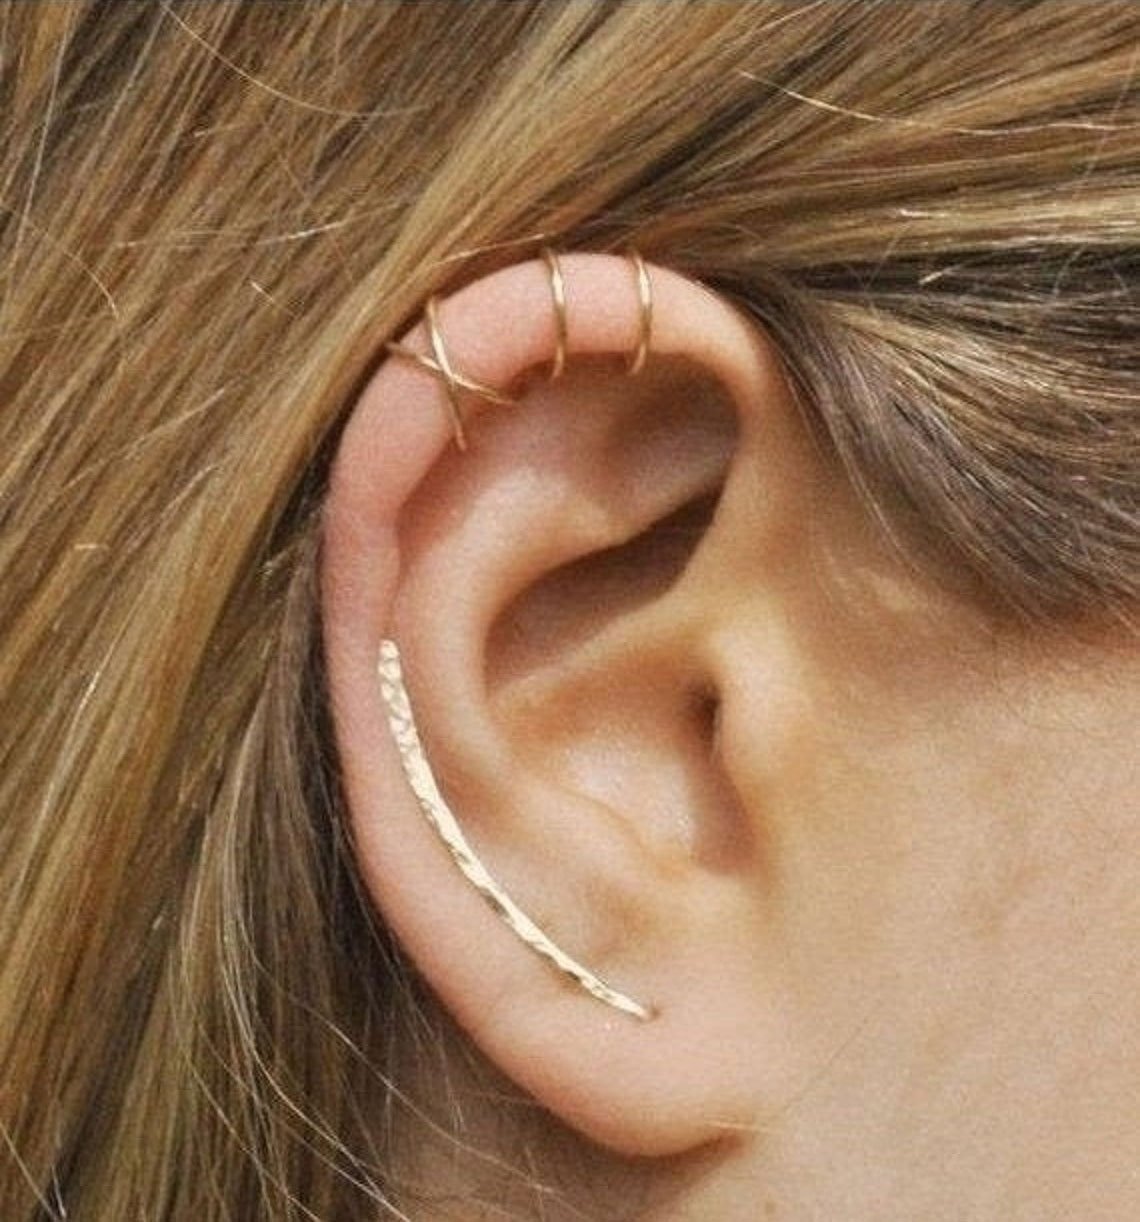 Ear climber earrings